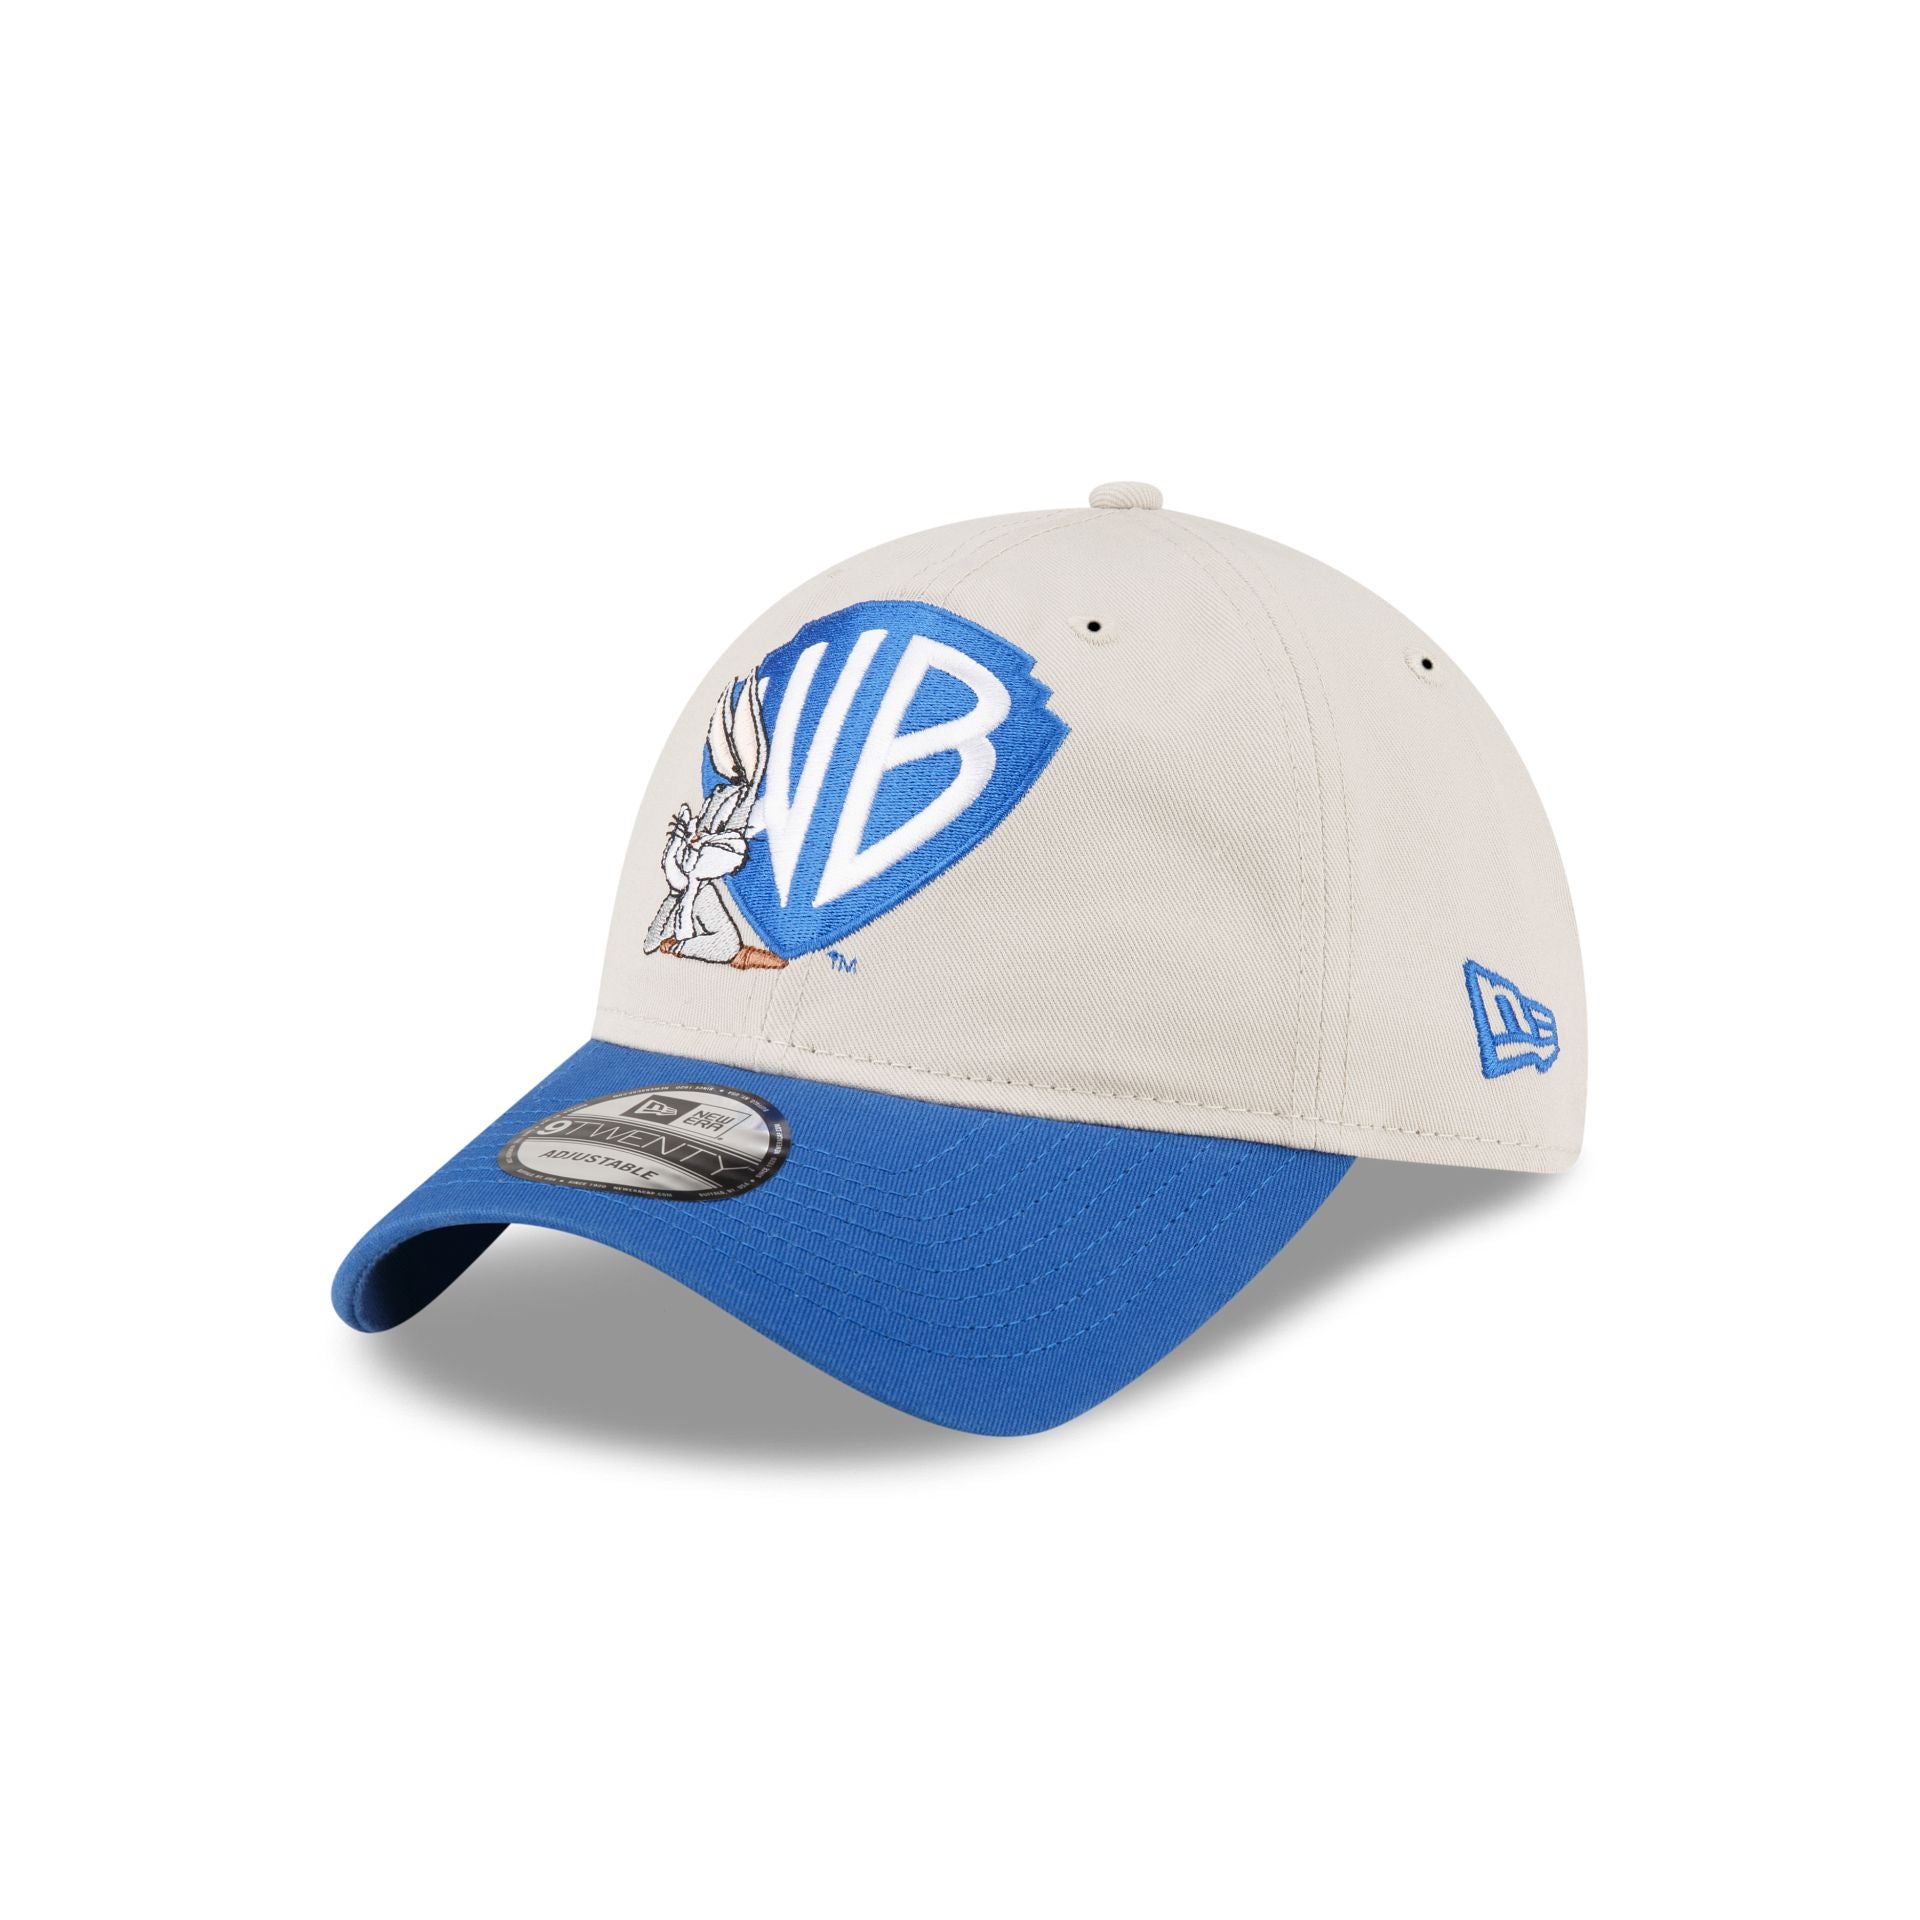 Warner Brothers Shield Pack 9TWENTY Adjustable Hat, White, by New Era